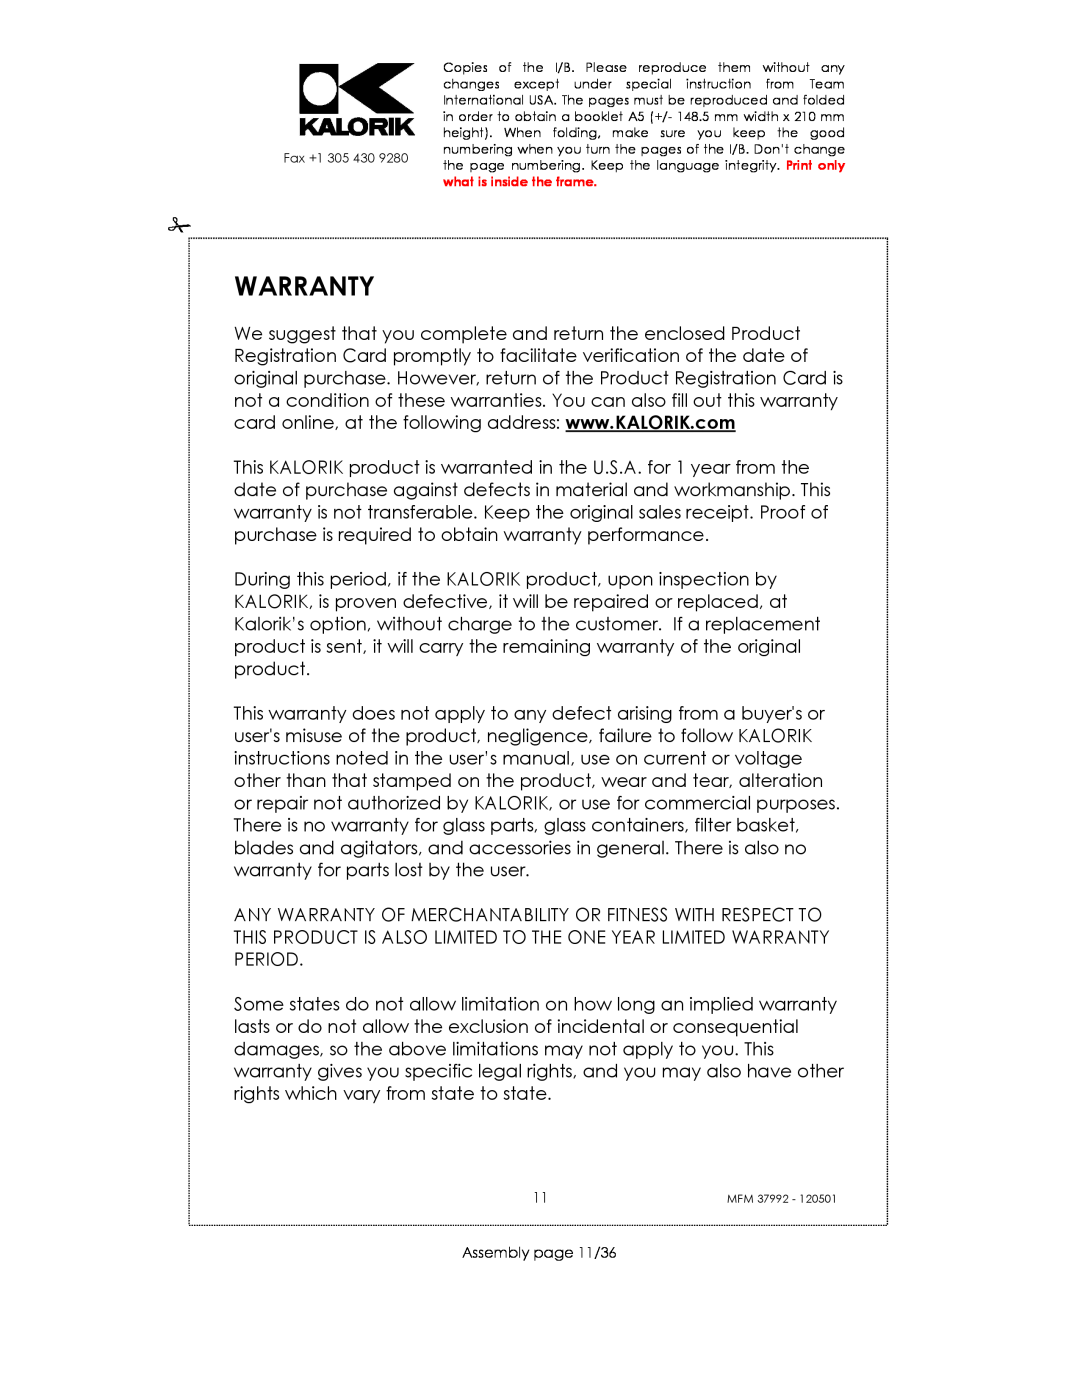 Kalorik MFM 37992 manual Warranty, Assembly page 11/36 